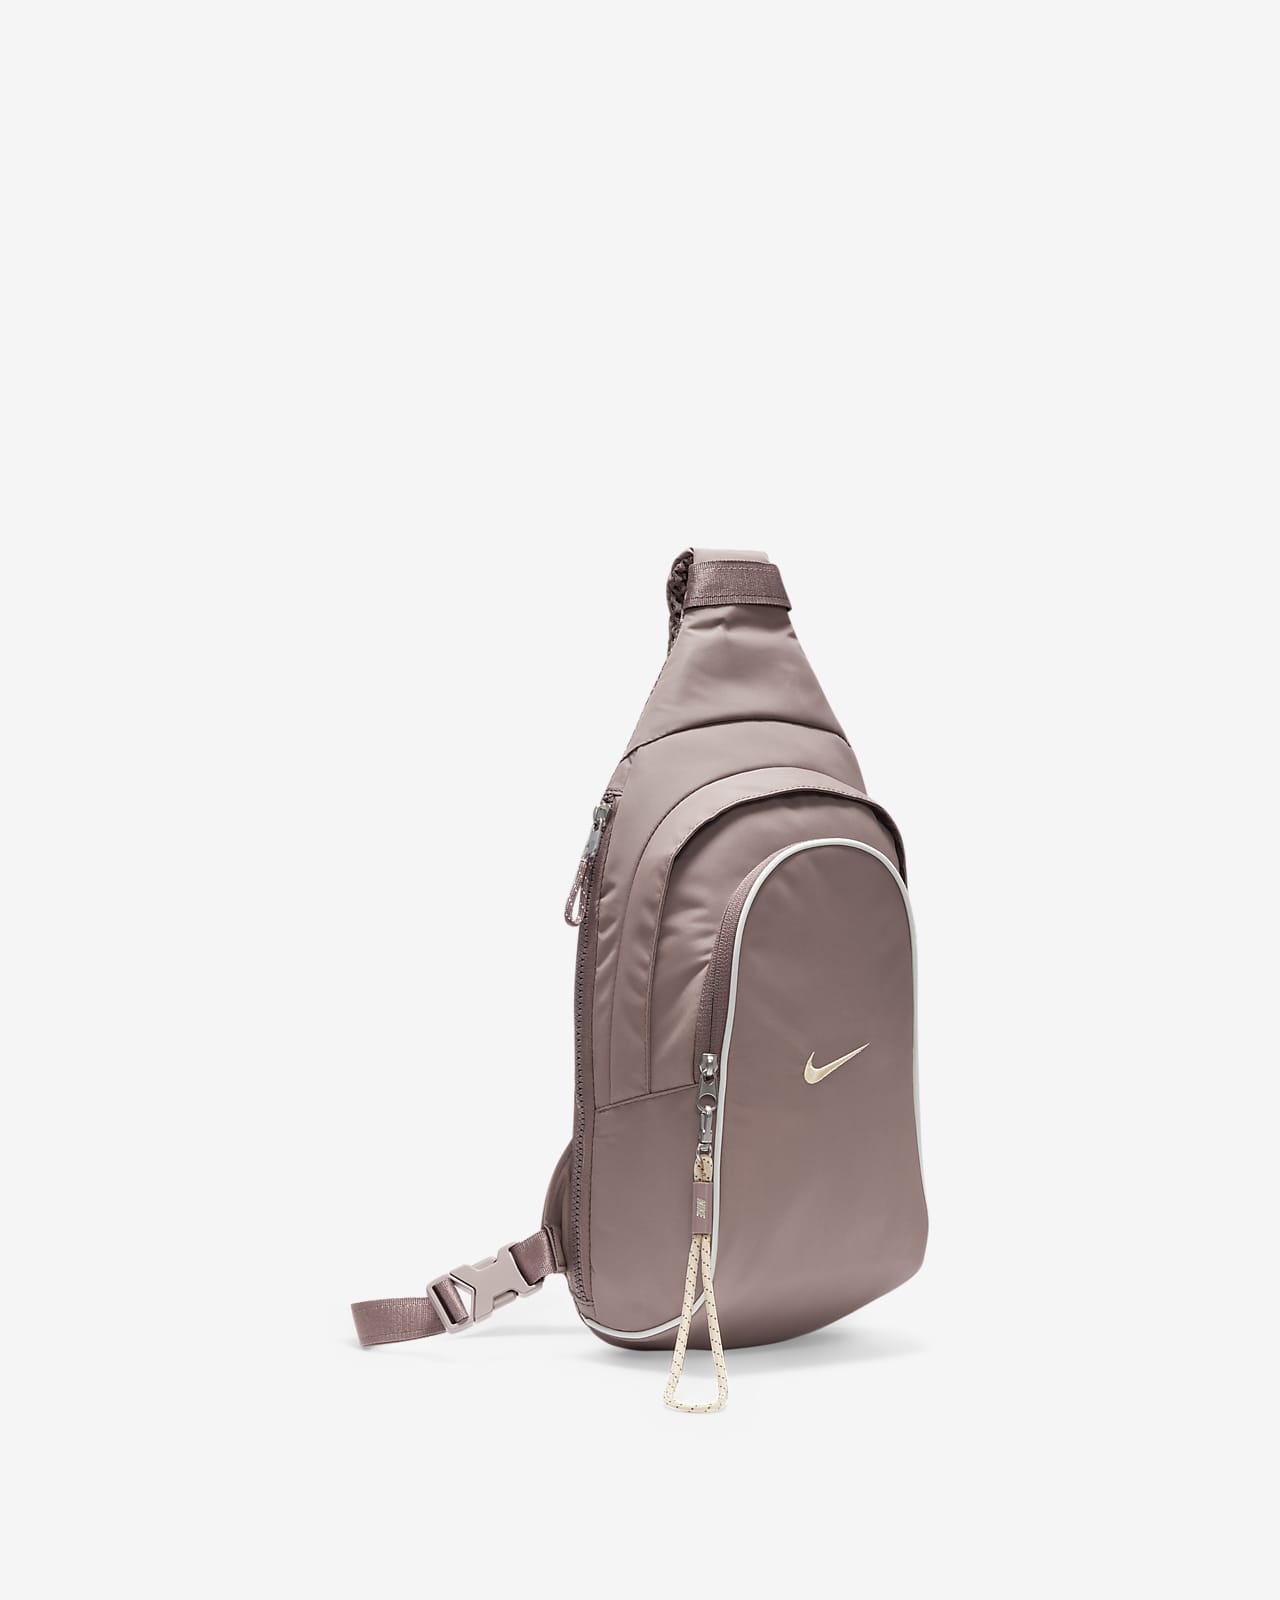 Women's Travel Duffle Bags at Nike - Bags